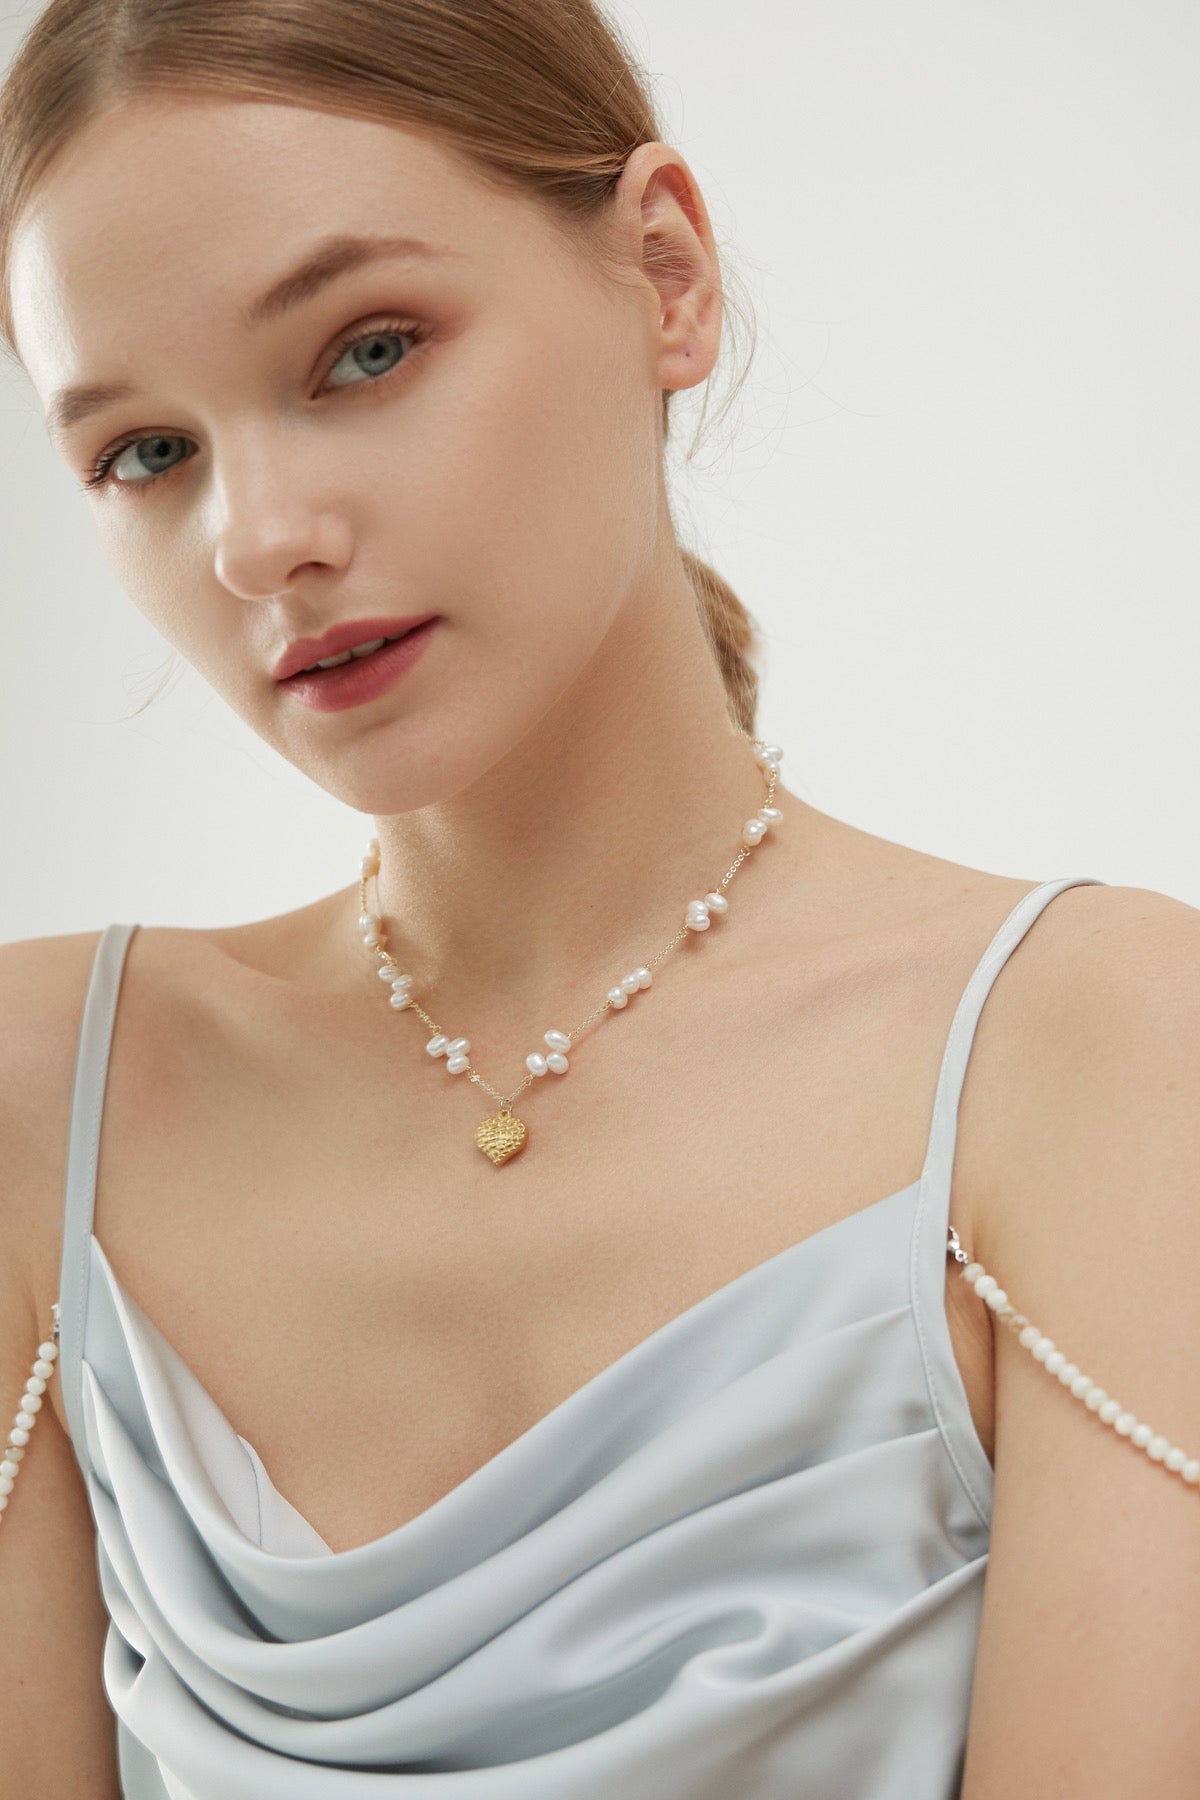 SKYE San Francisco Shop Chic Modern Elegant Classy Women Jewelry French Parisian Minimalist Angeline Heart Pendant Pearl Necklace 2